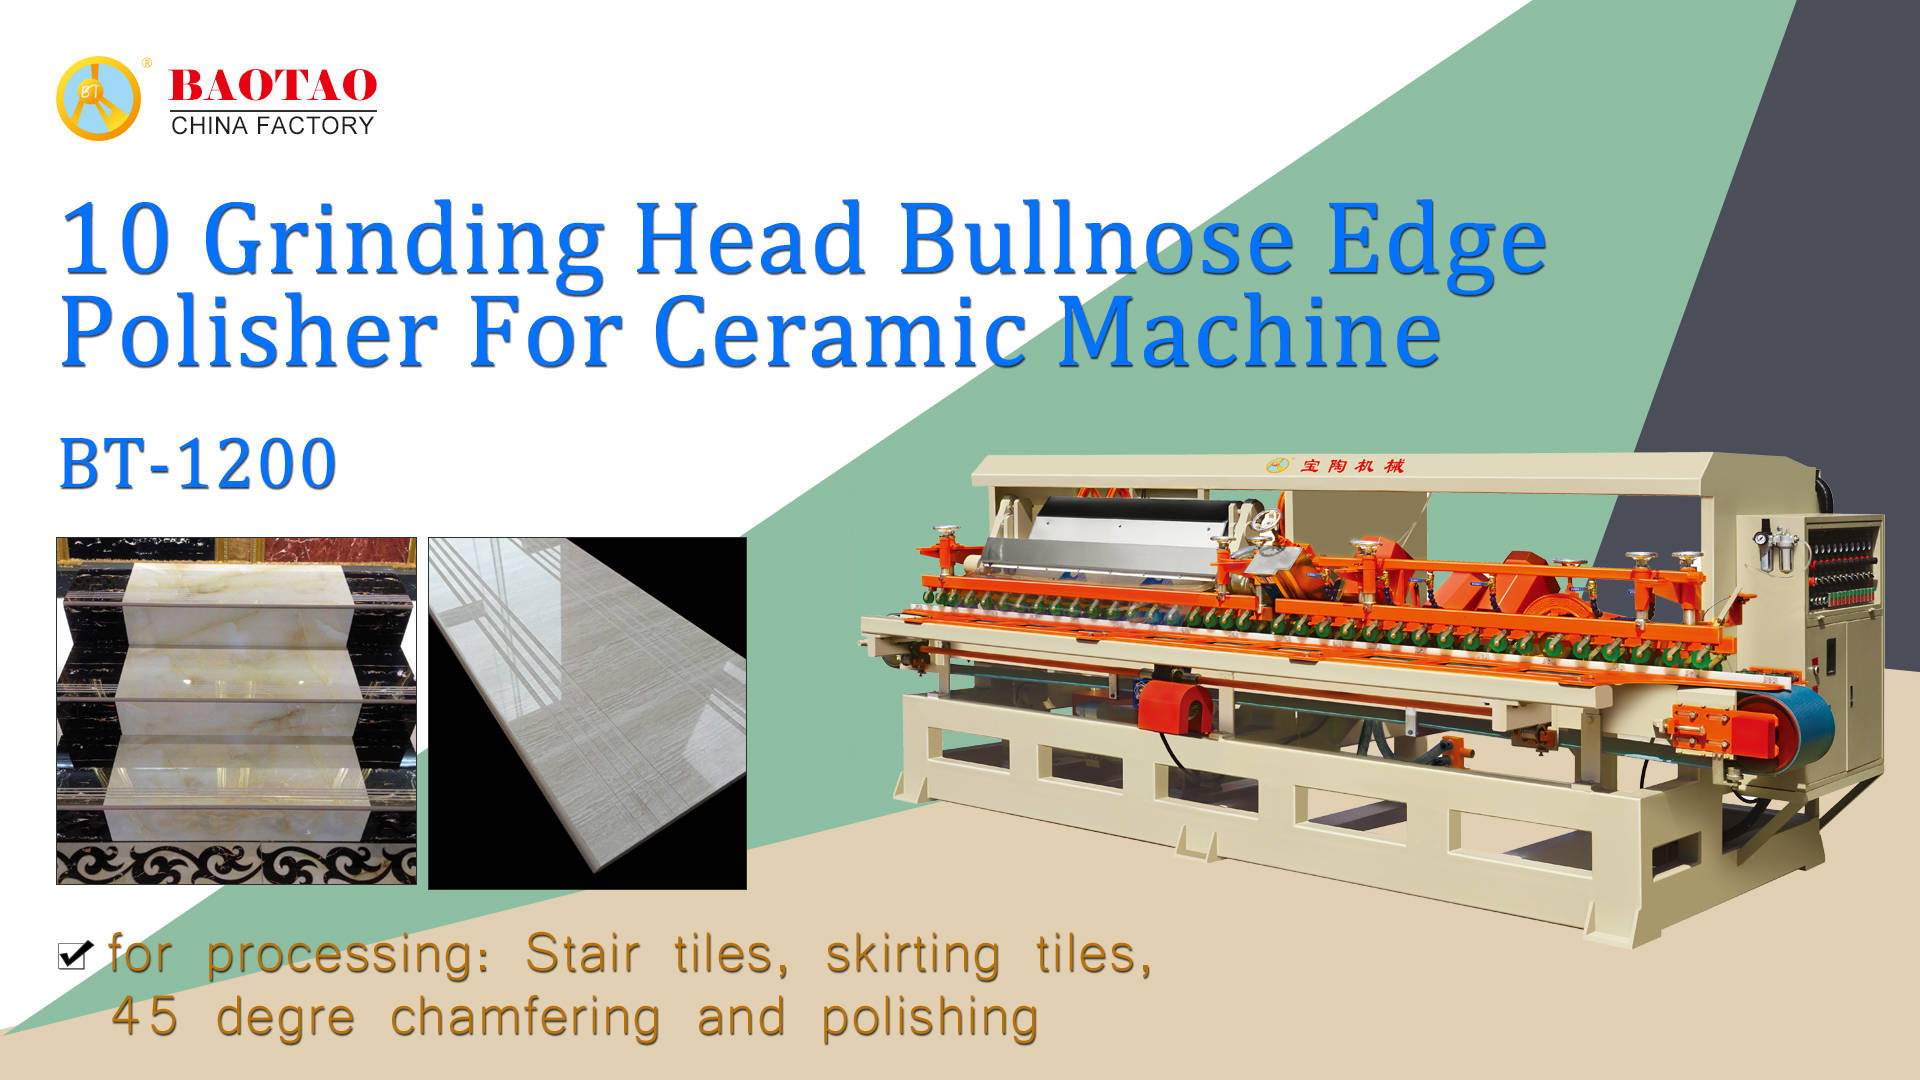 Baotao 10 Grinding Head Bullnose Edge polisher For Ceramic Machine